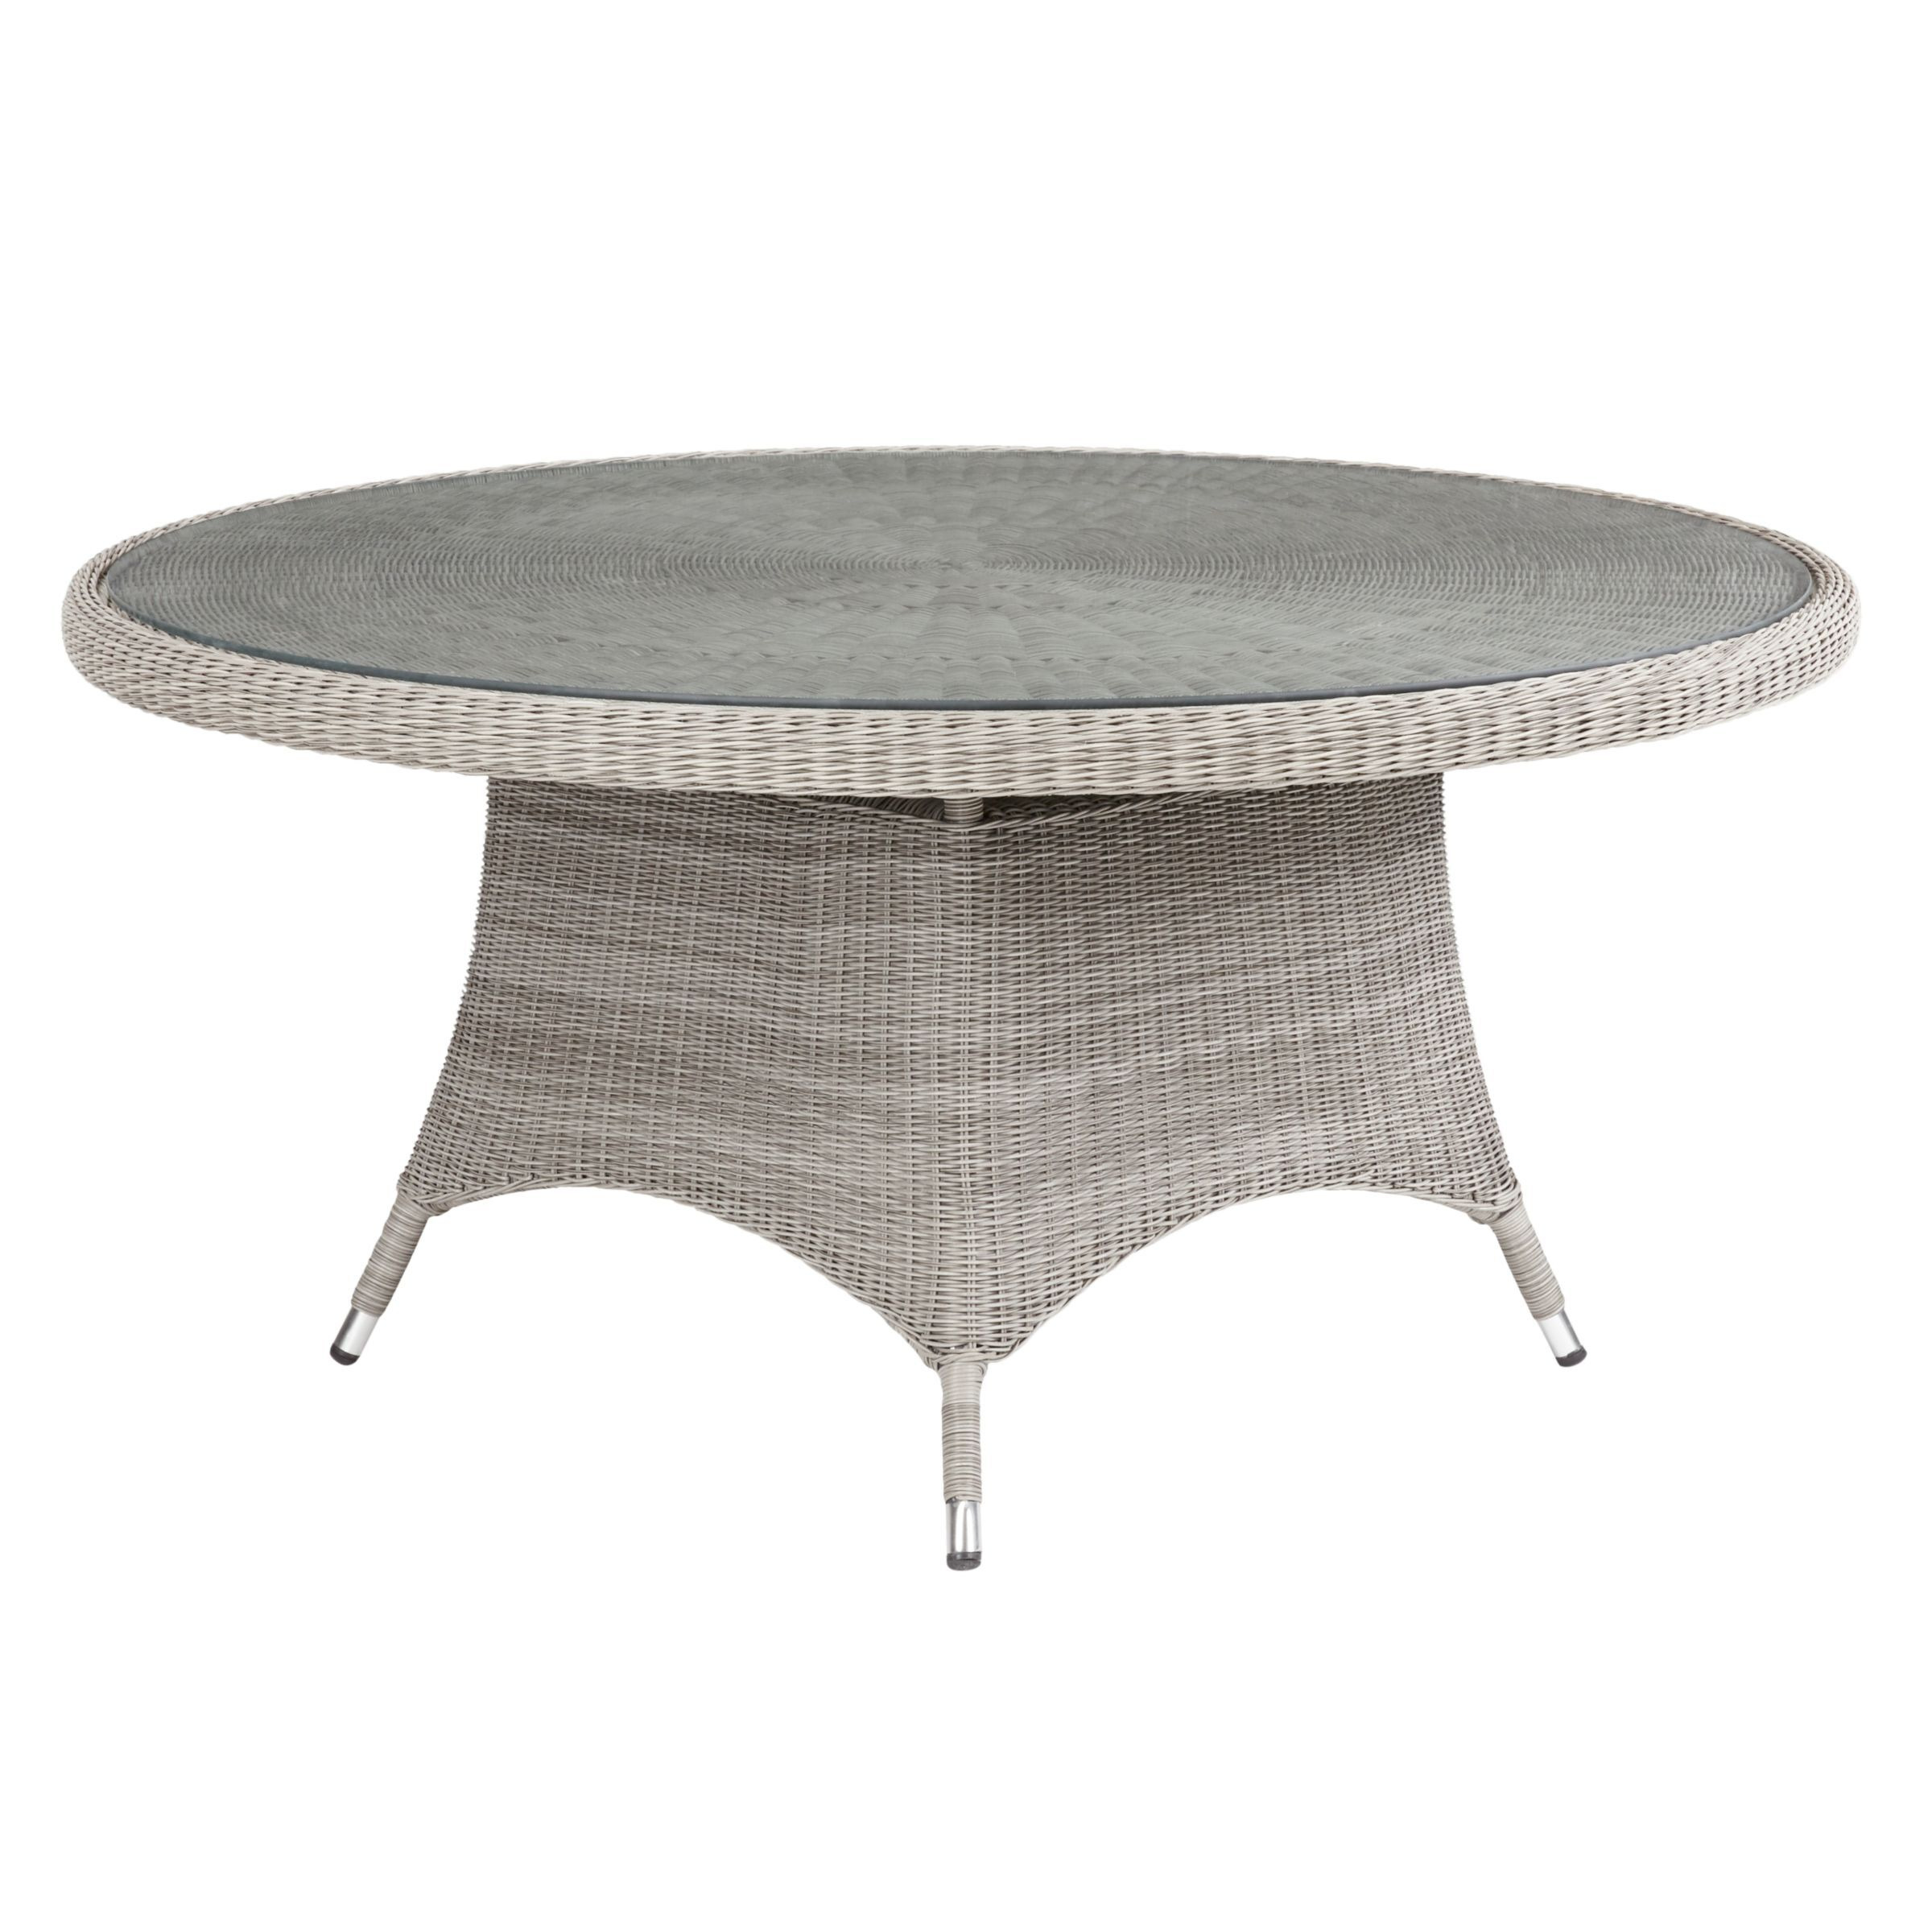 John Lewis Dante 6-Seater Round Glass Top Garden Dining Table - image 1